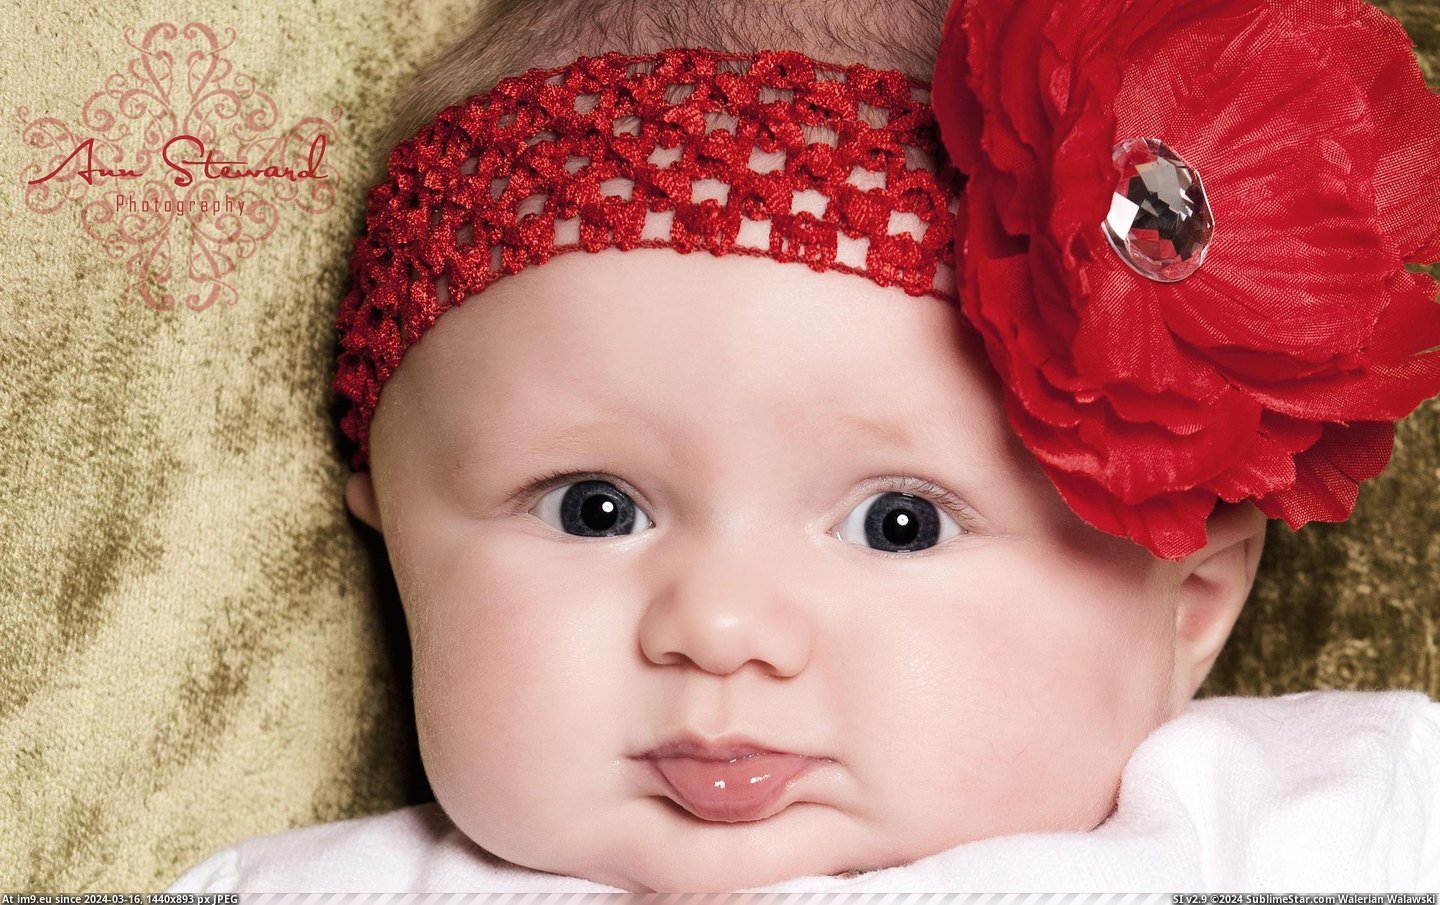 #Cute #Wallpaper #Super #Wide #Baby Super Cute Little Baby Wide HD Wallpaper Pic. (Bild von album Unique HD Wallpapers))